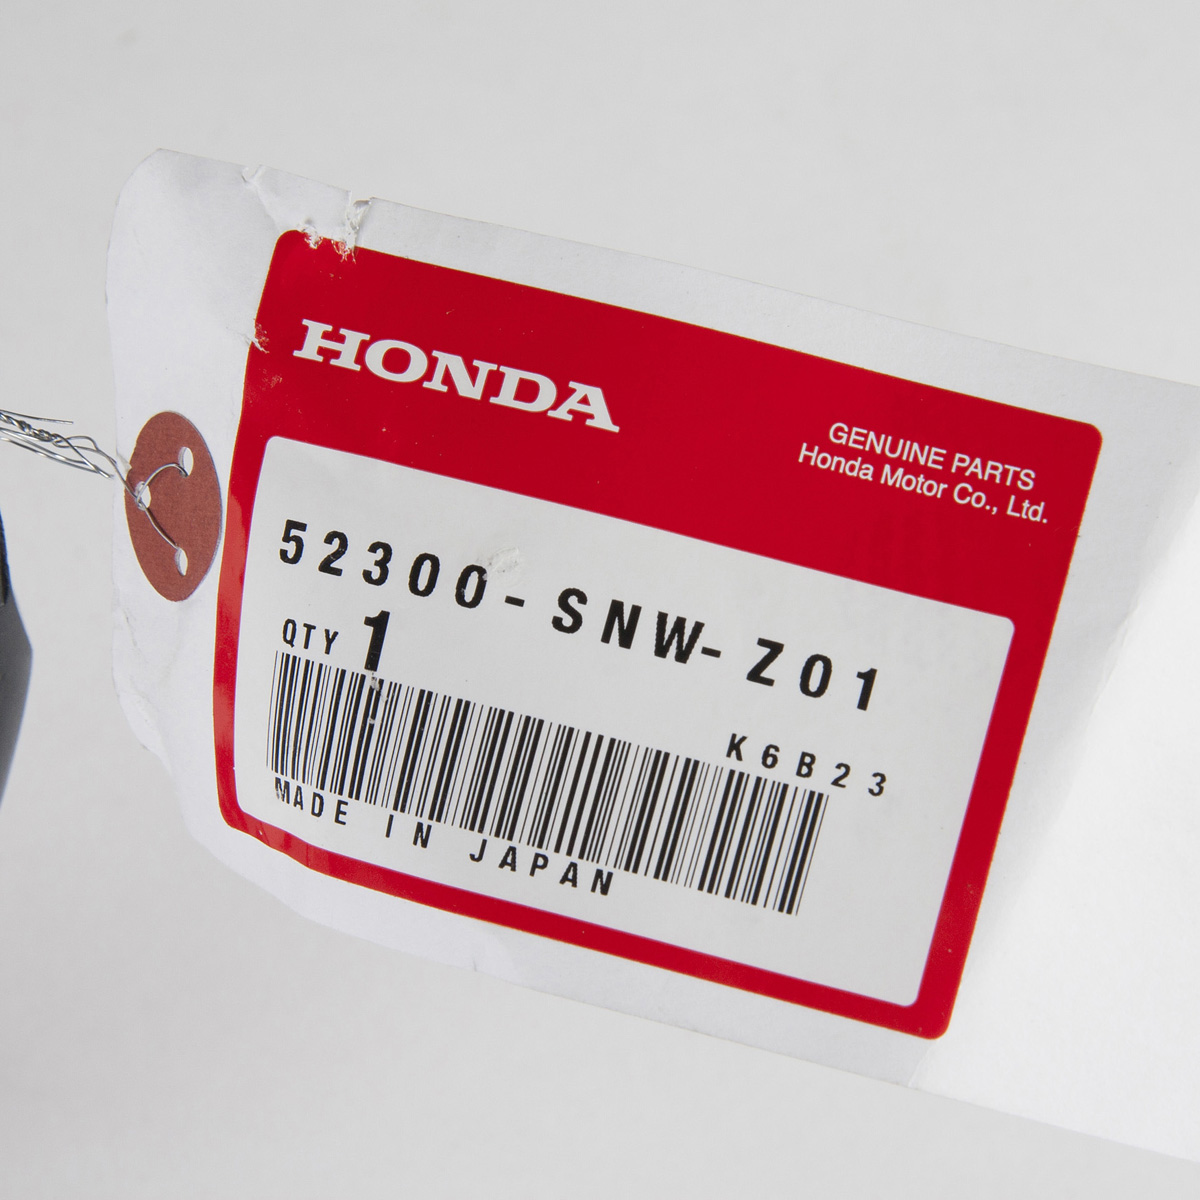 Honda Genuine OEM Honda Civic FD2 Rear Stabilizer Bar Genuine OEM Honda 52300-SNW-Z01